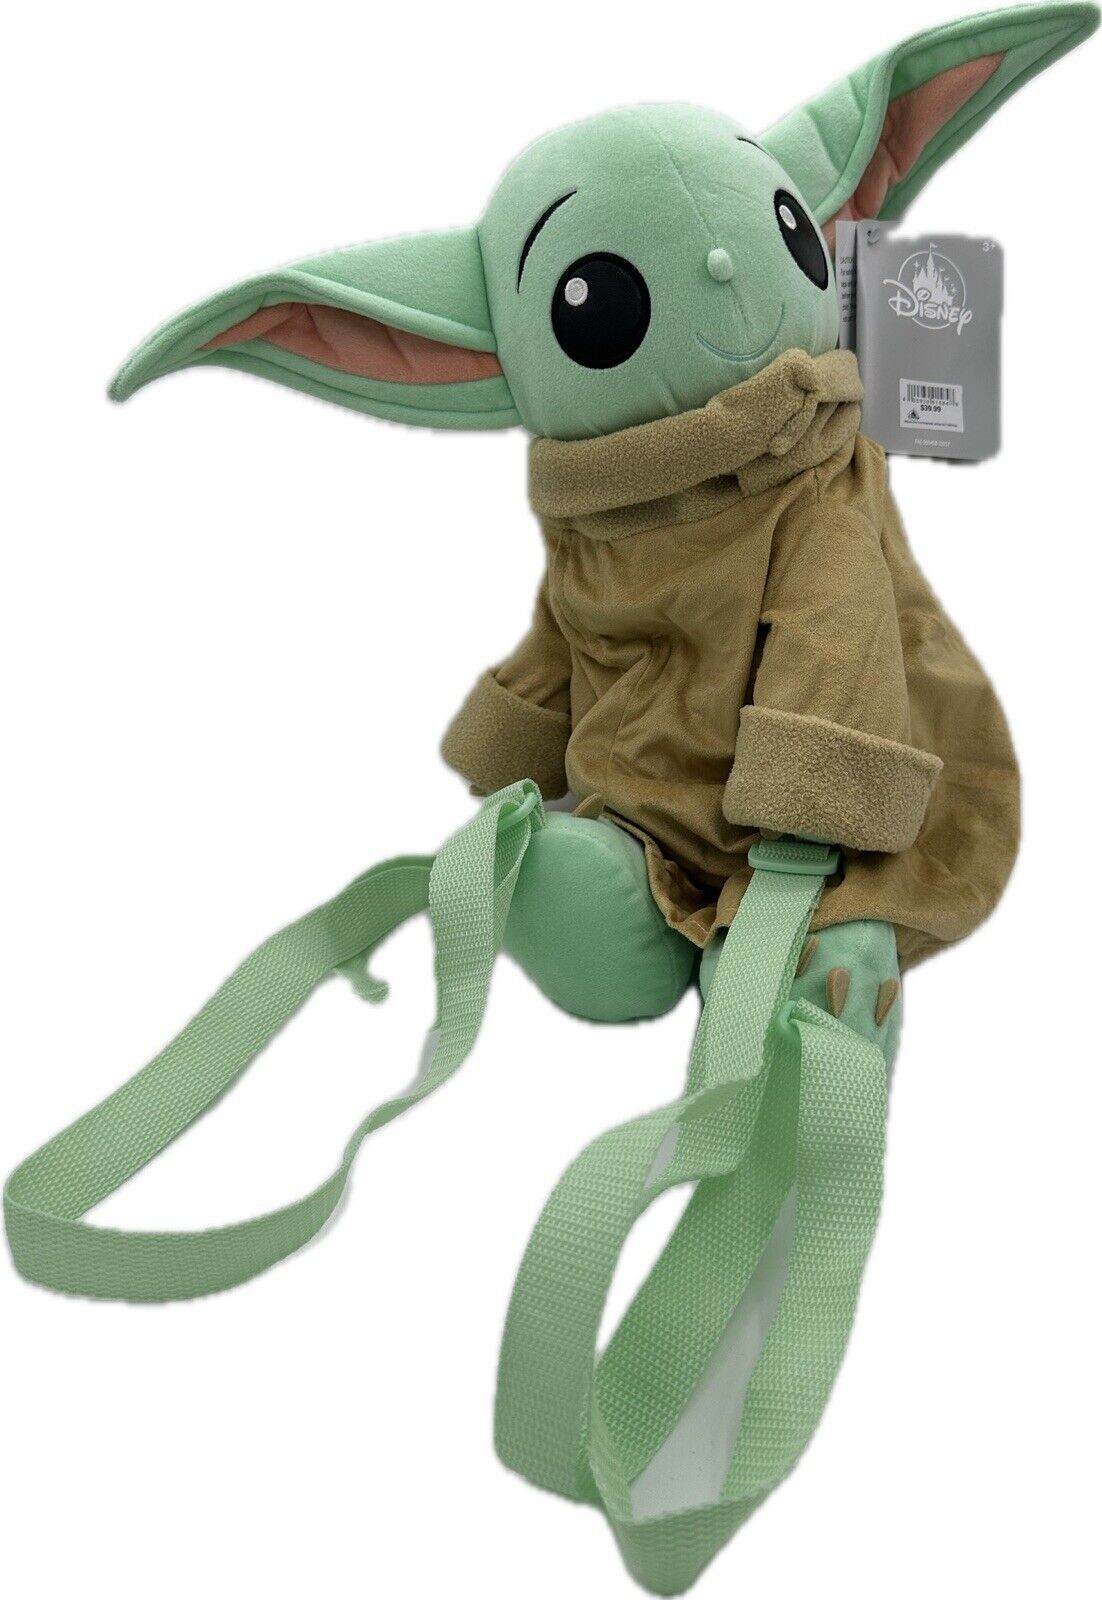 Disney Parks Star Wars Mandalorian The Child Adult Yoda Backpack Plush New NWT